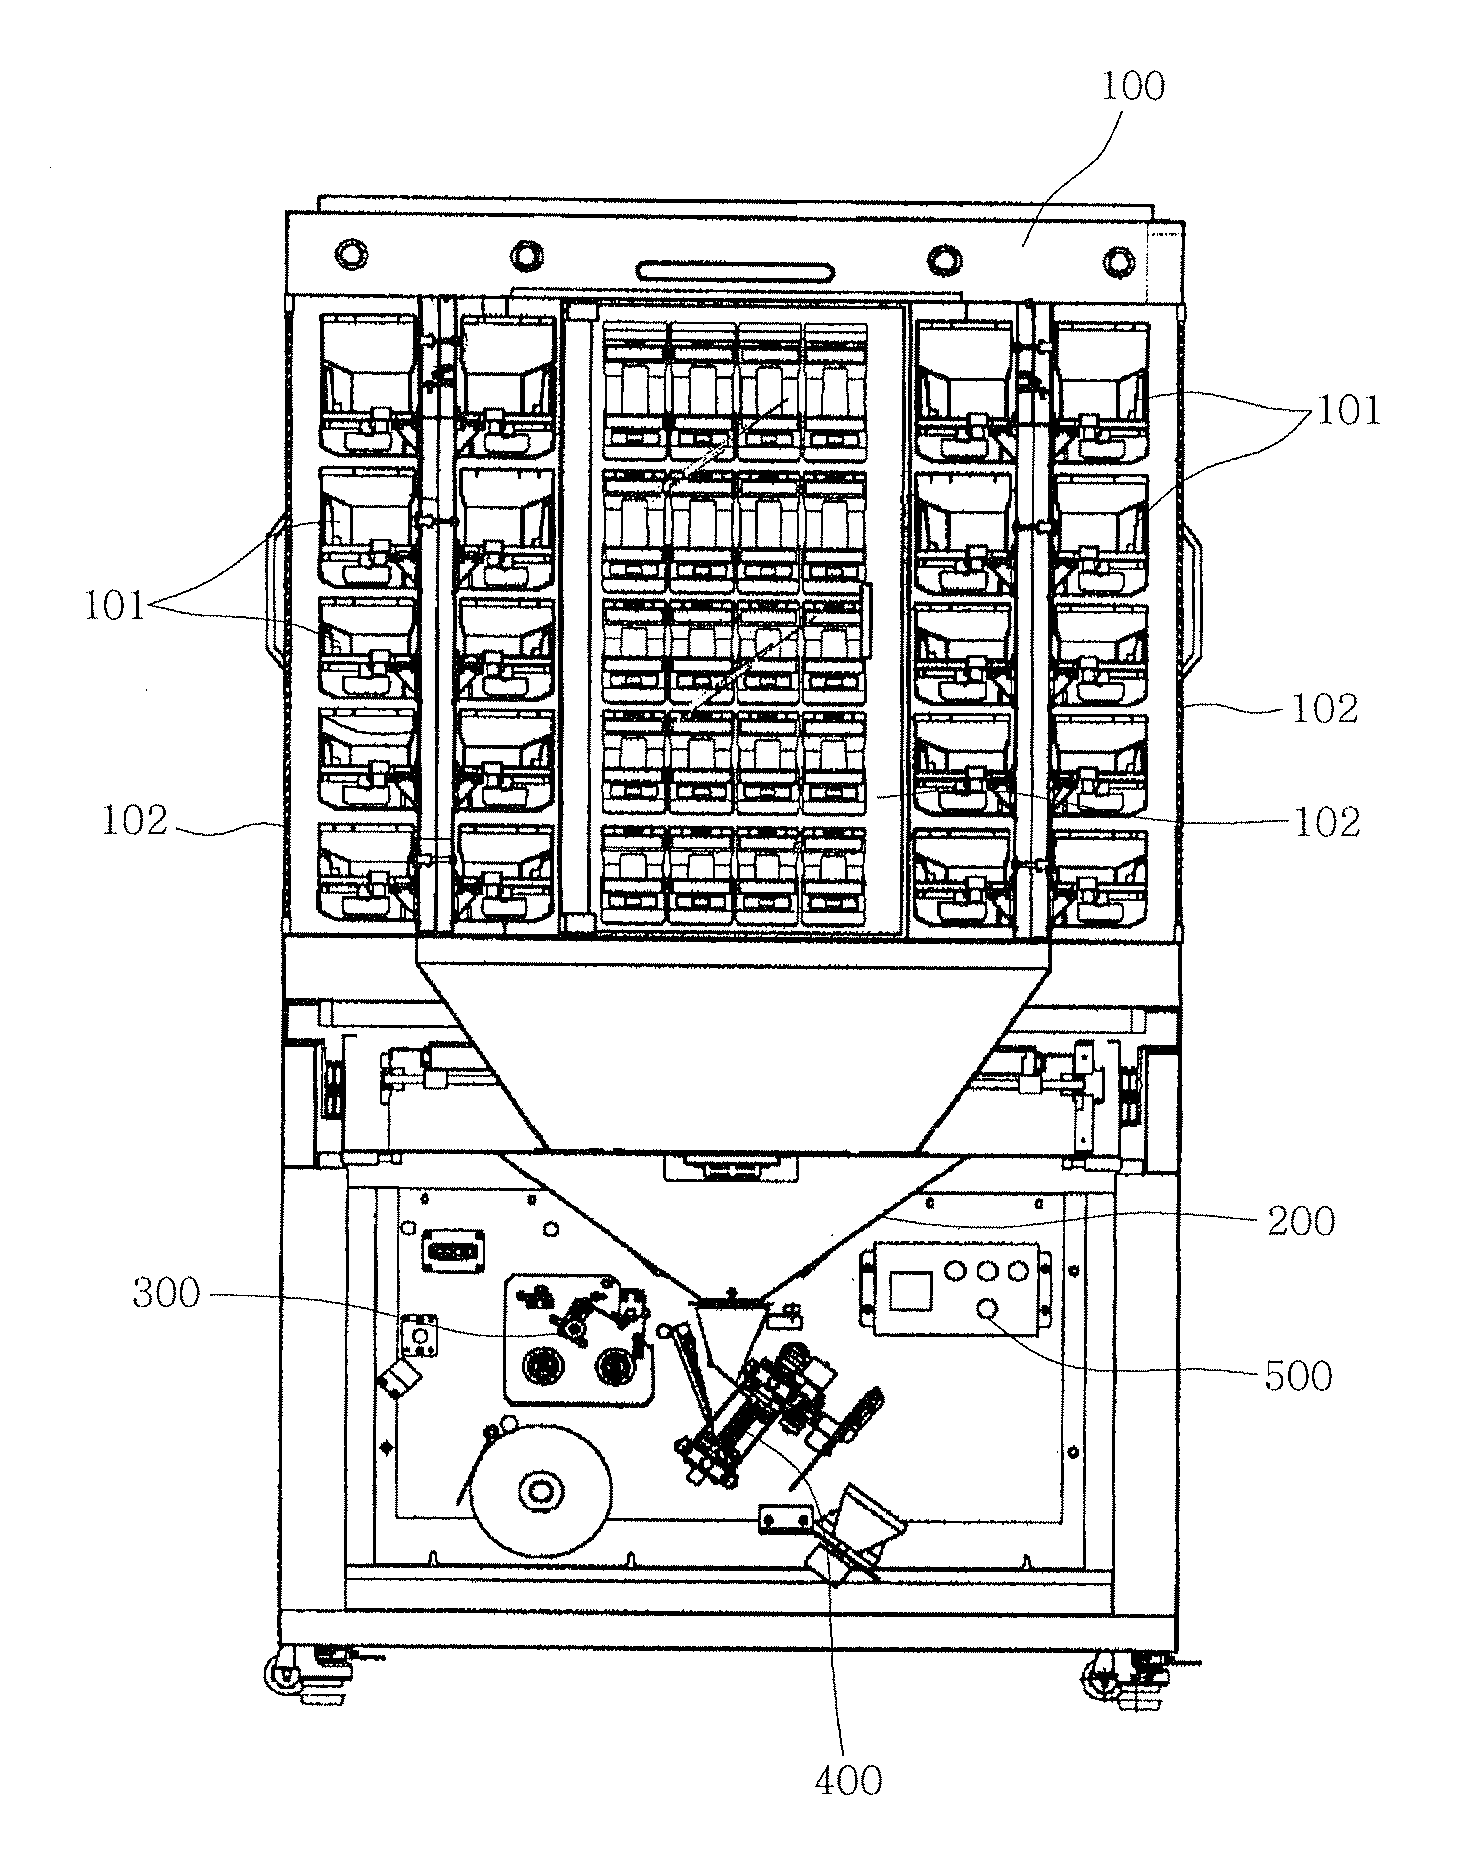 Automatic medicine packaging machine with door lock unit